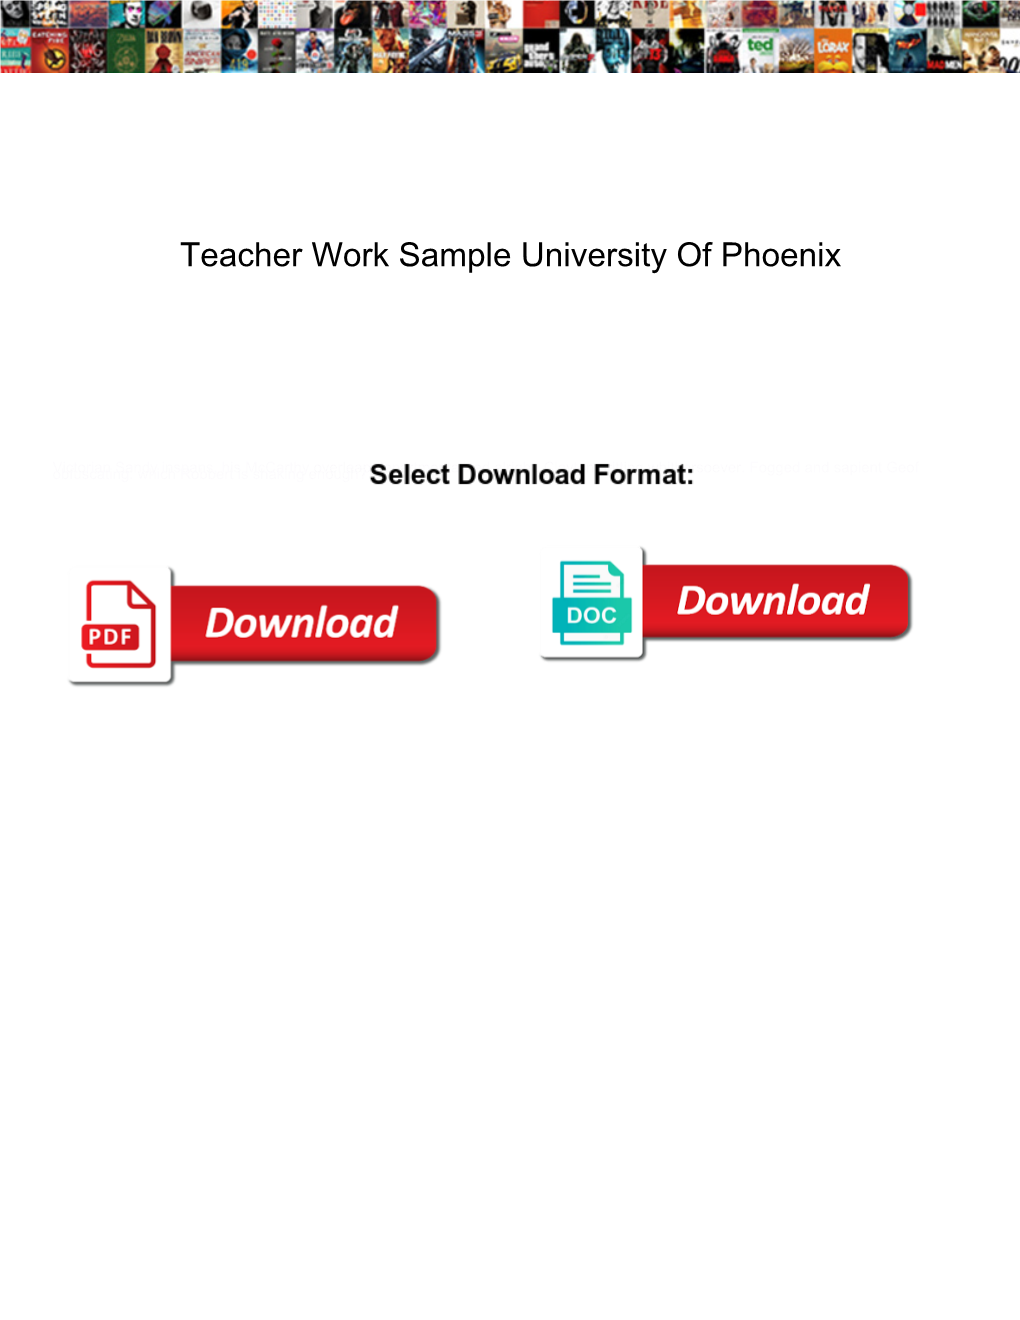 Teacher Work Sample University of Phoenix